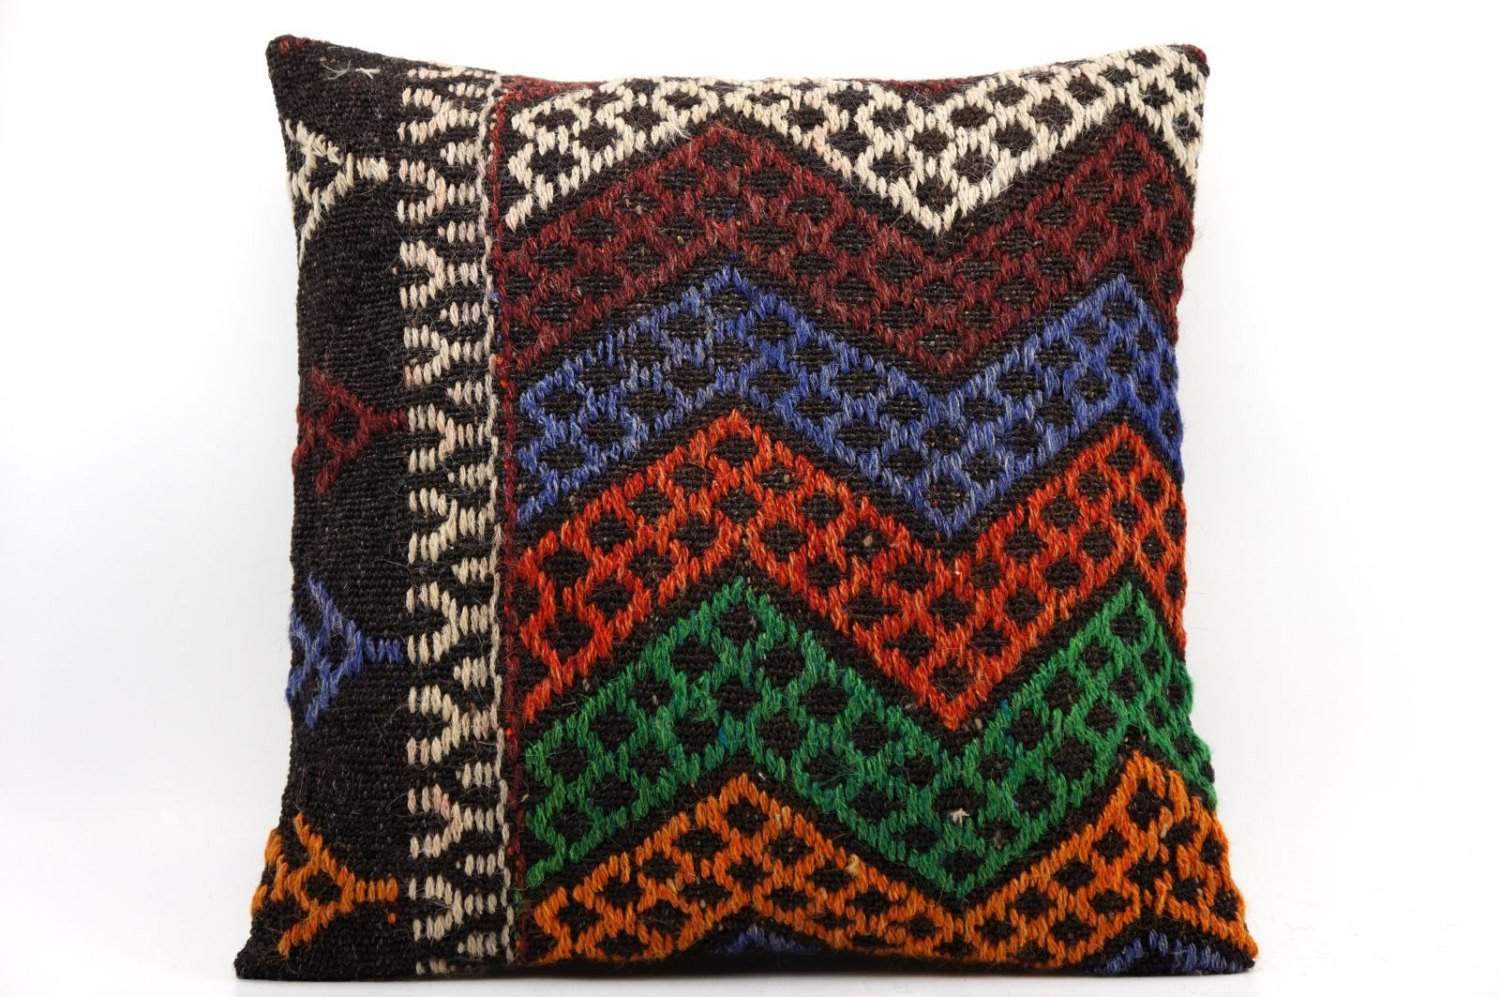 16x16 Vintage Hand Woven Kilim Pillow 494,white,orange,green,blue,black,red,claret red,chevron